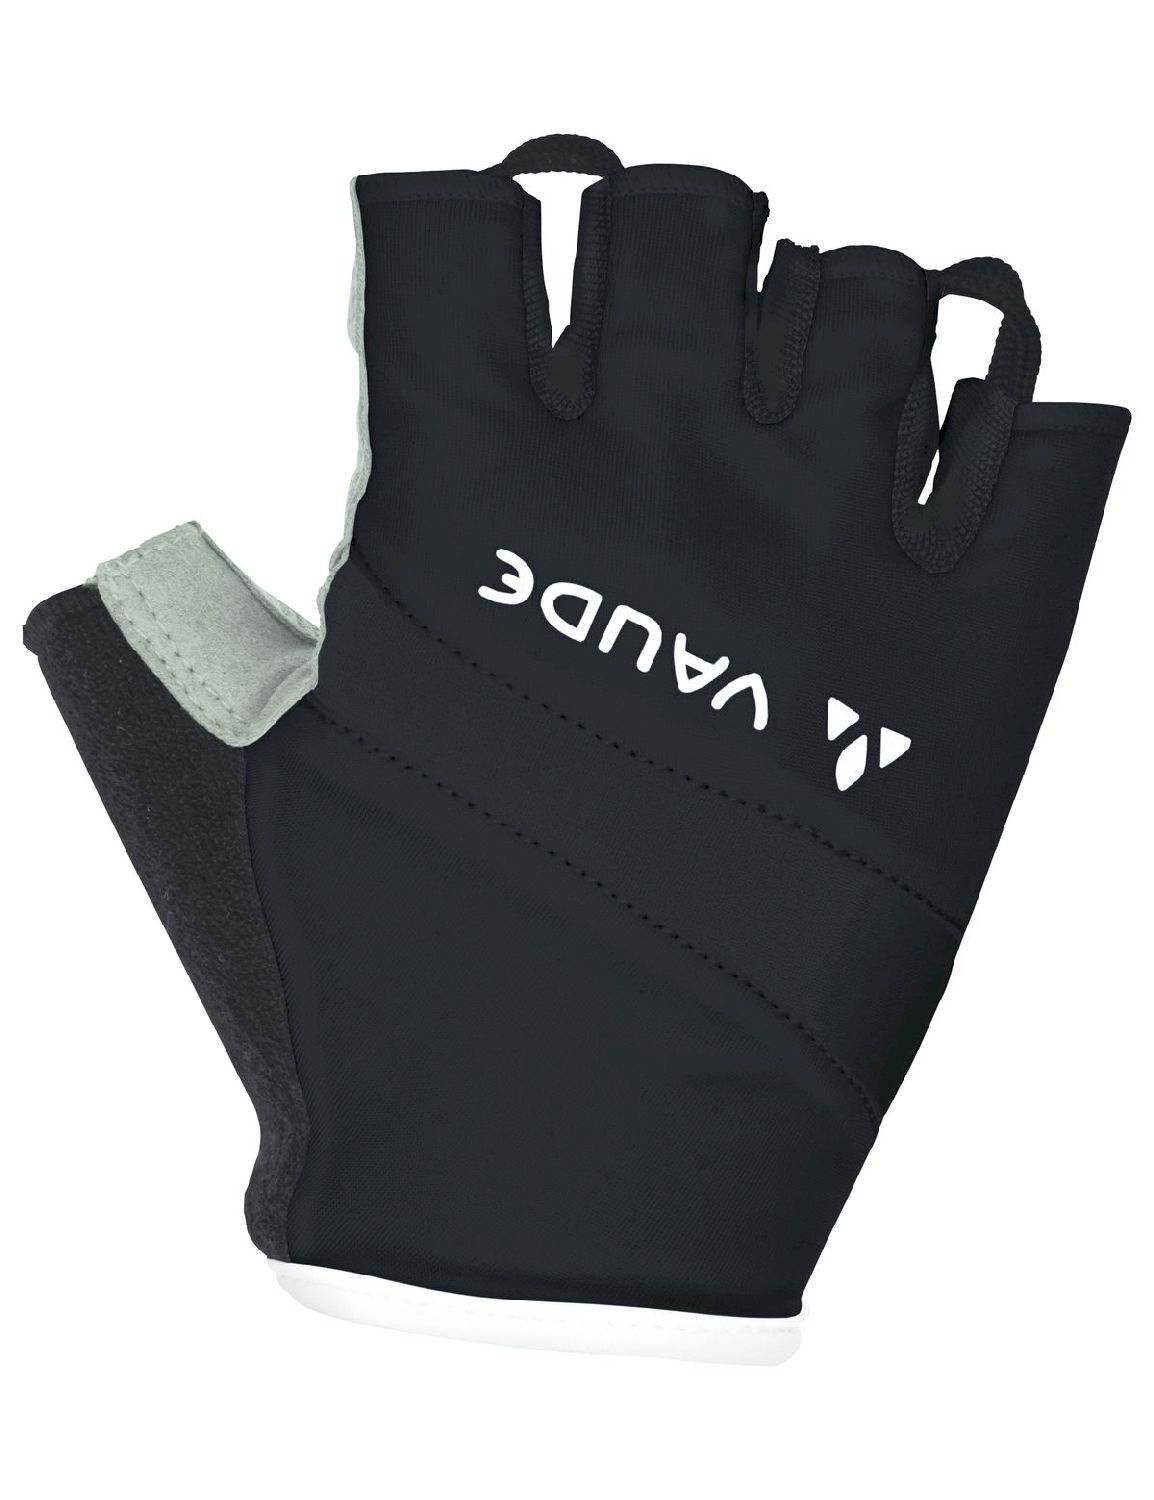 Vaude Active Gloves - Guantes cortos ciclismo - Mujer